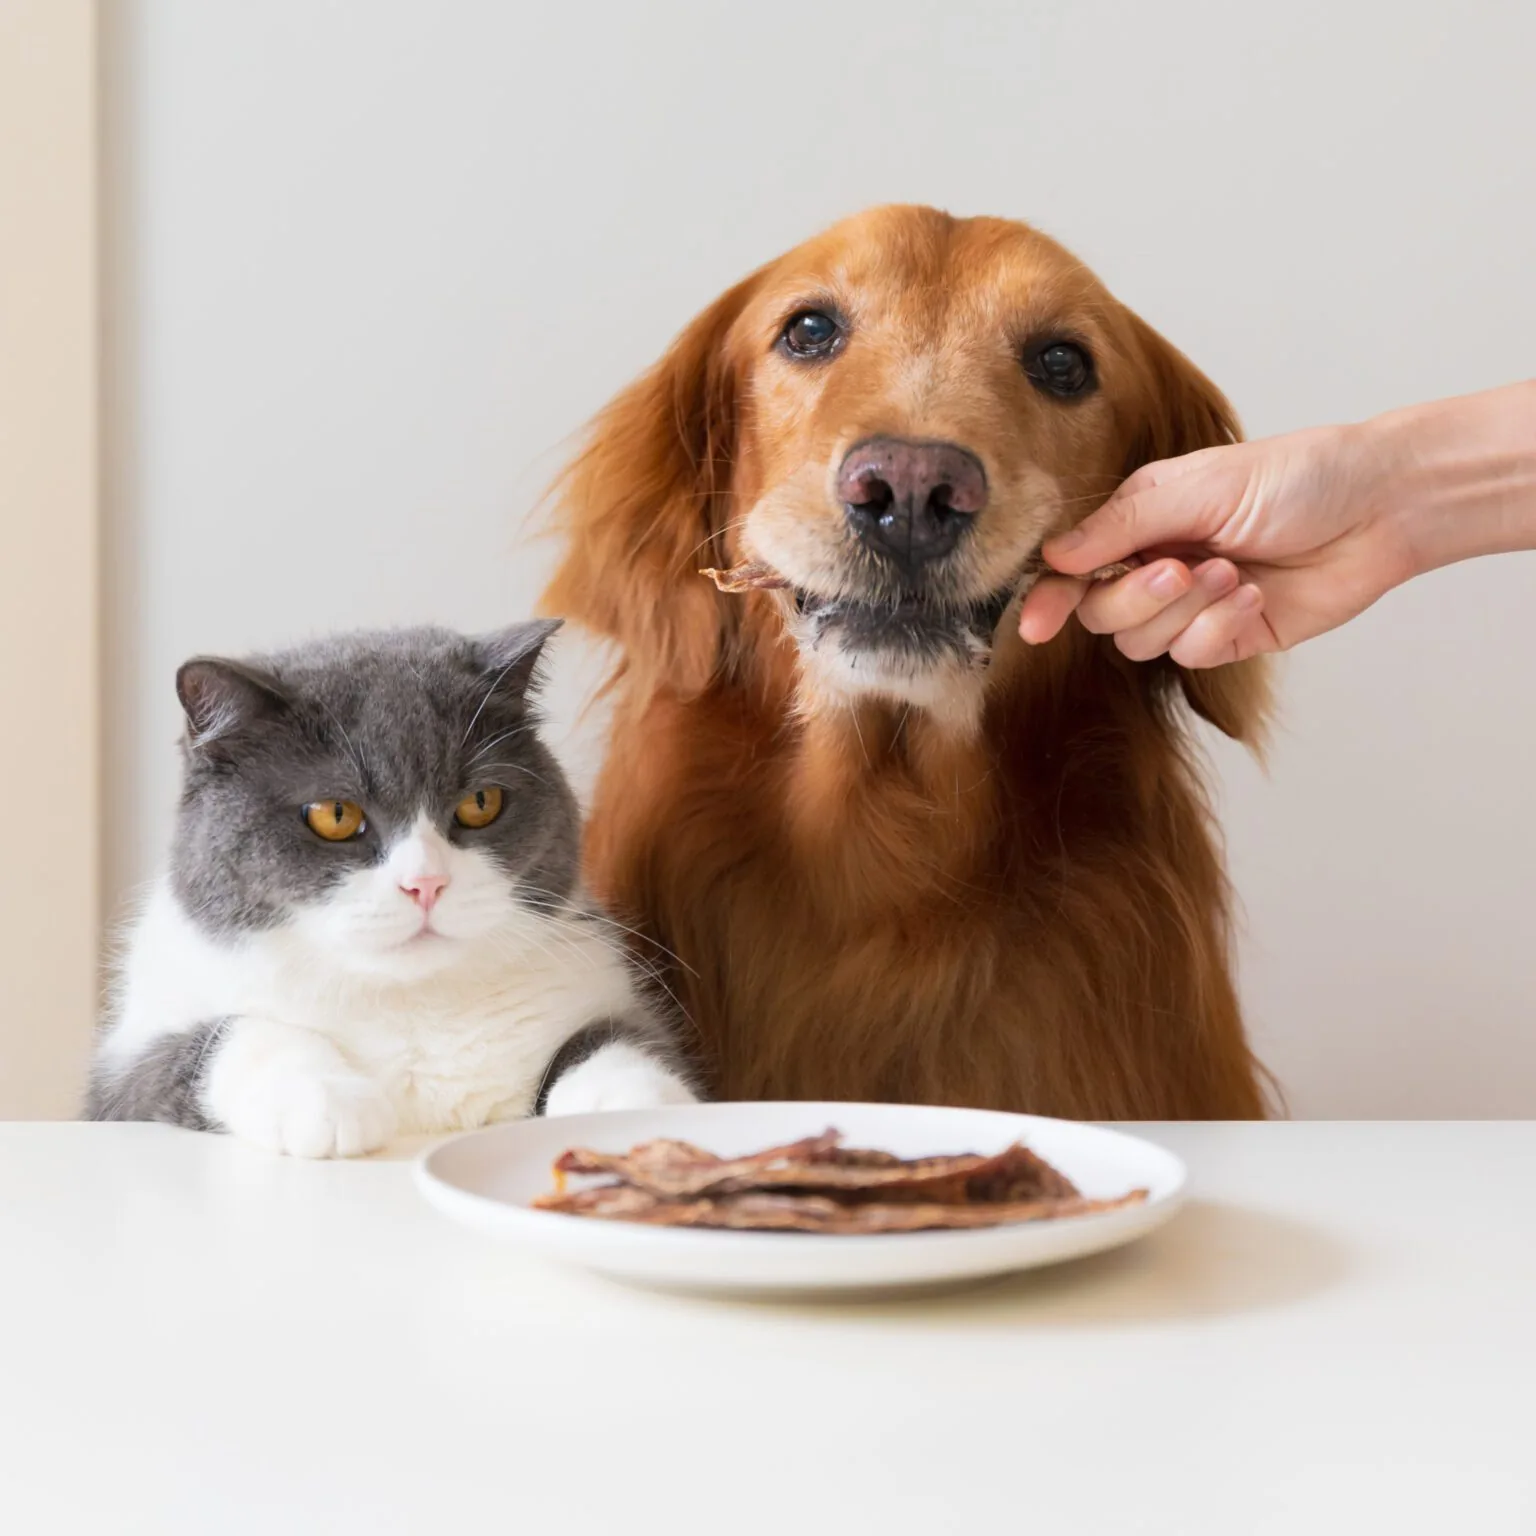 Hand holding jerky snack for golden retriever dog, british shorthair cat next to